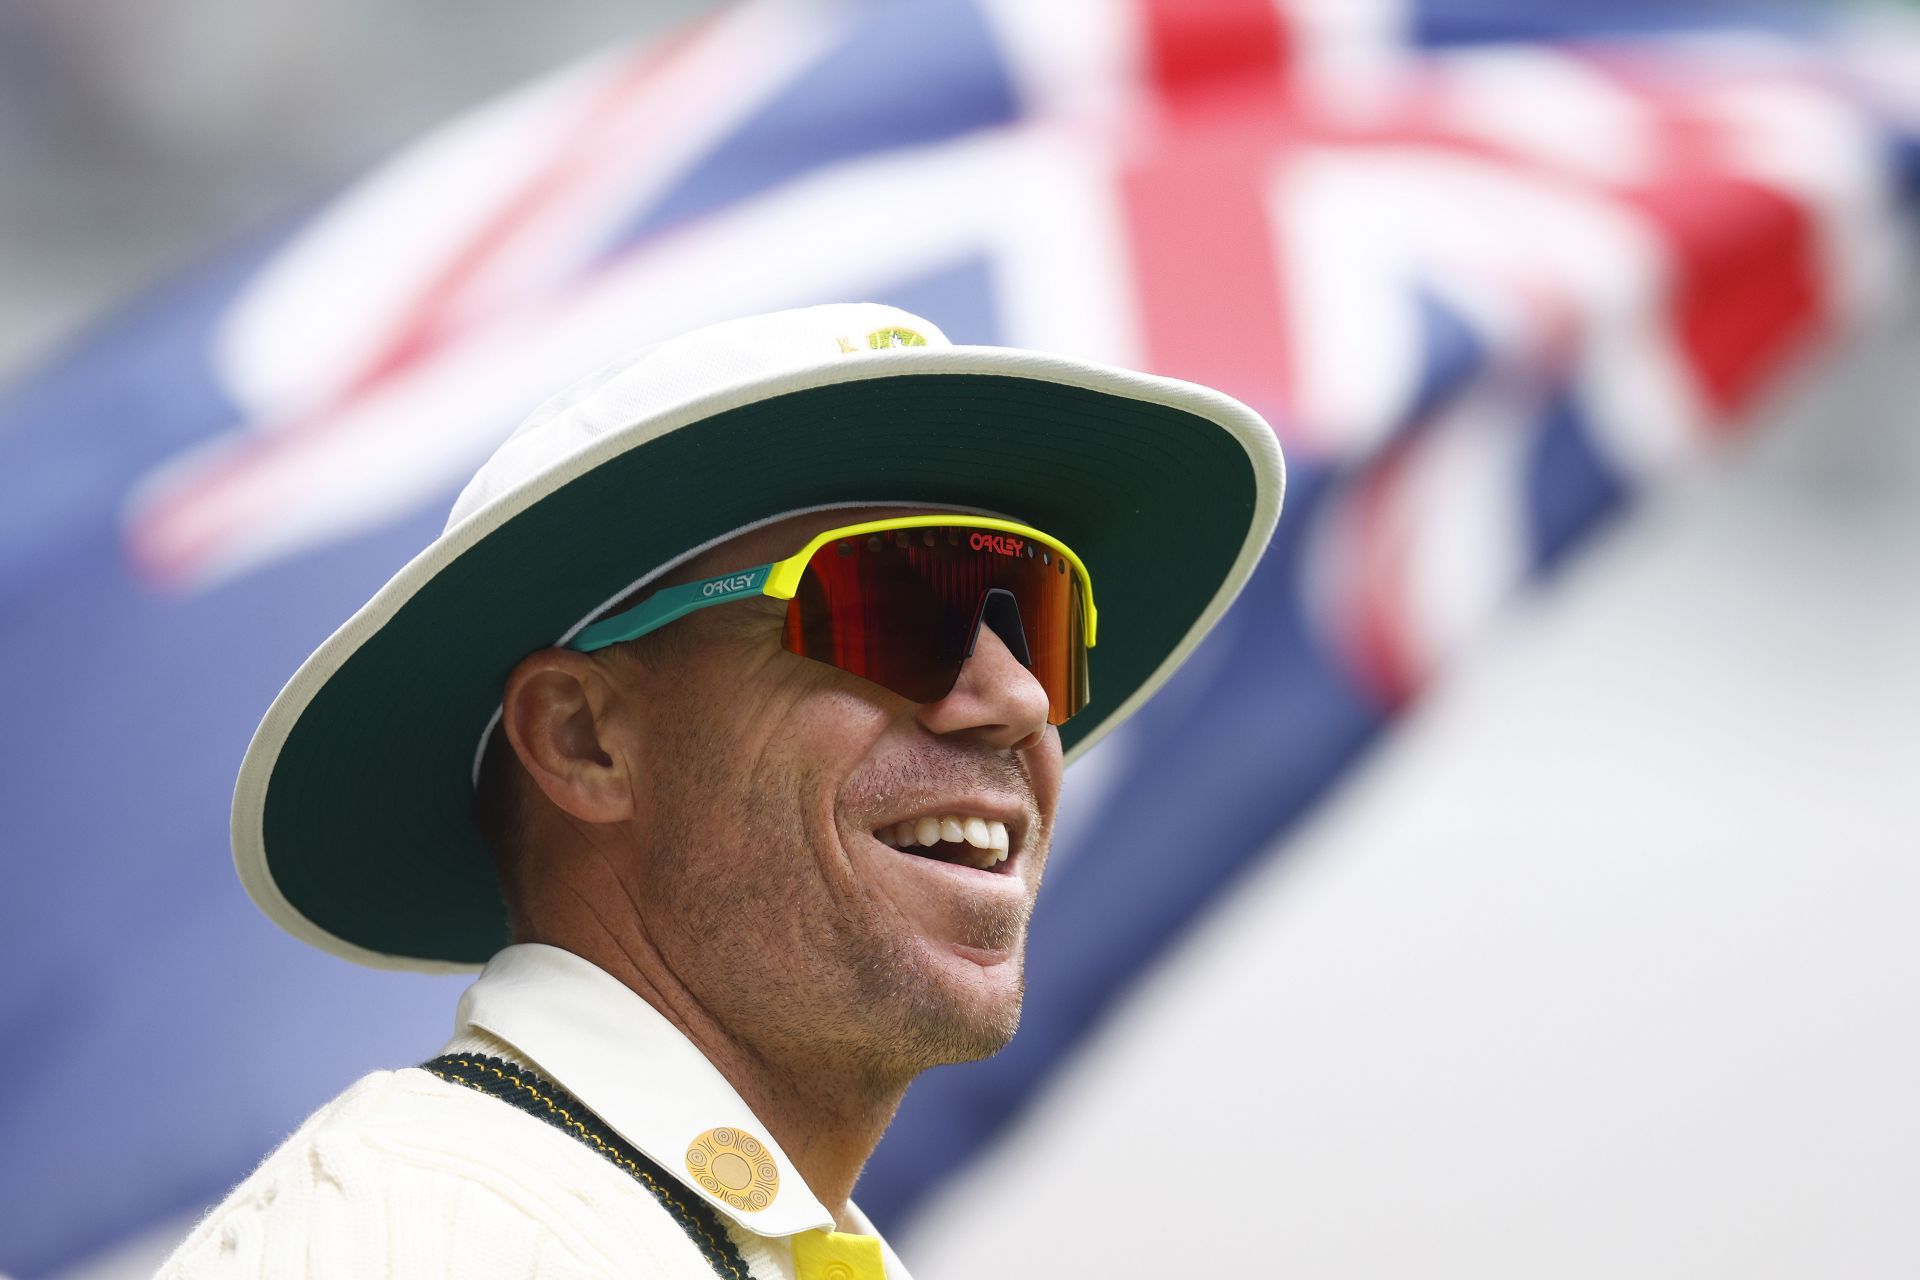 Australia v South Africa - Second Test: Day 4